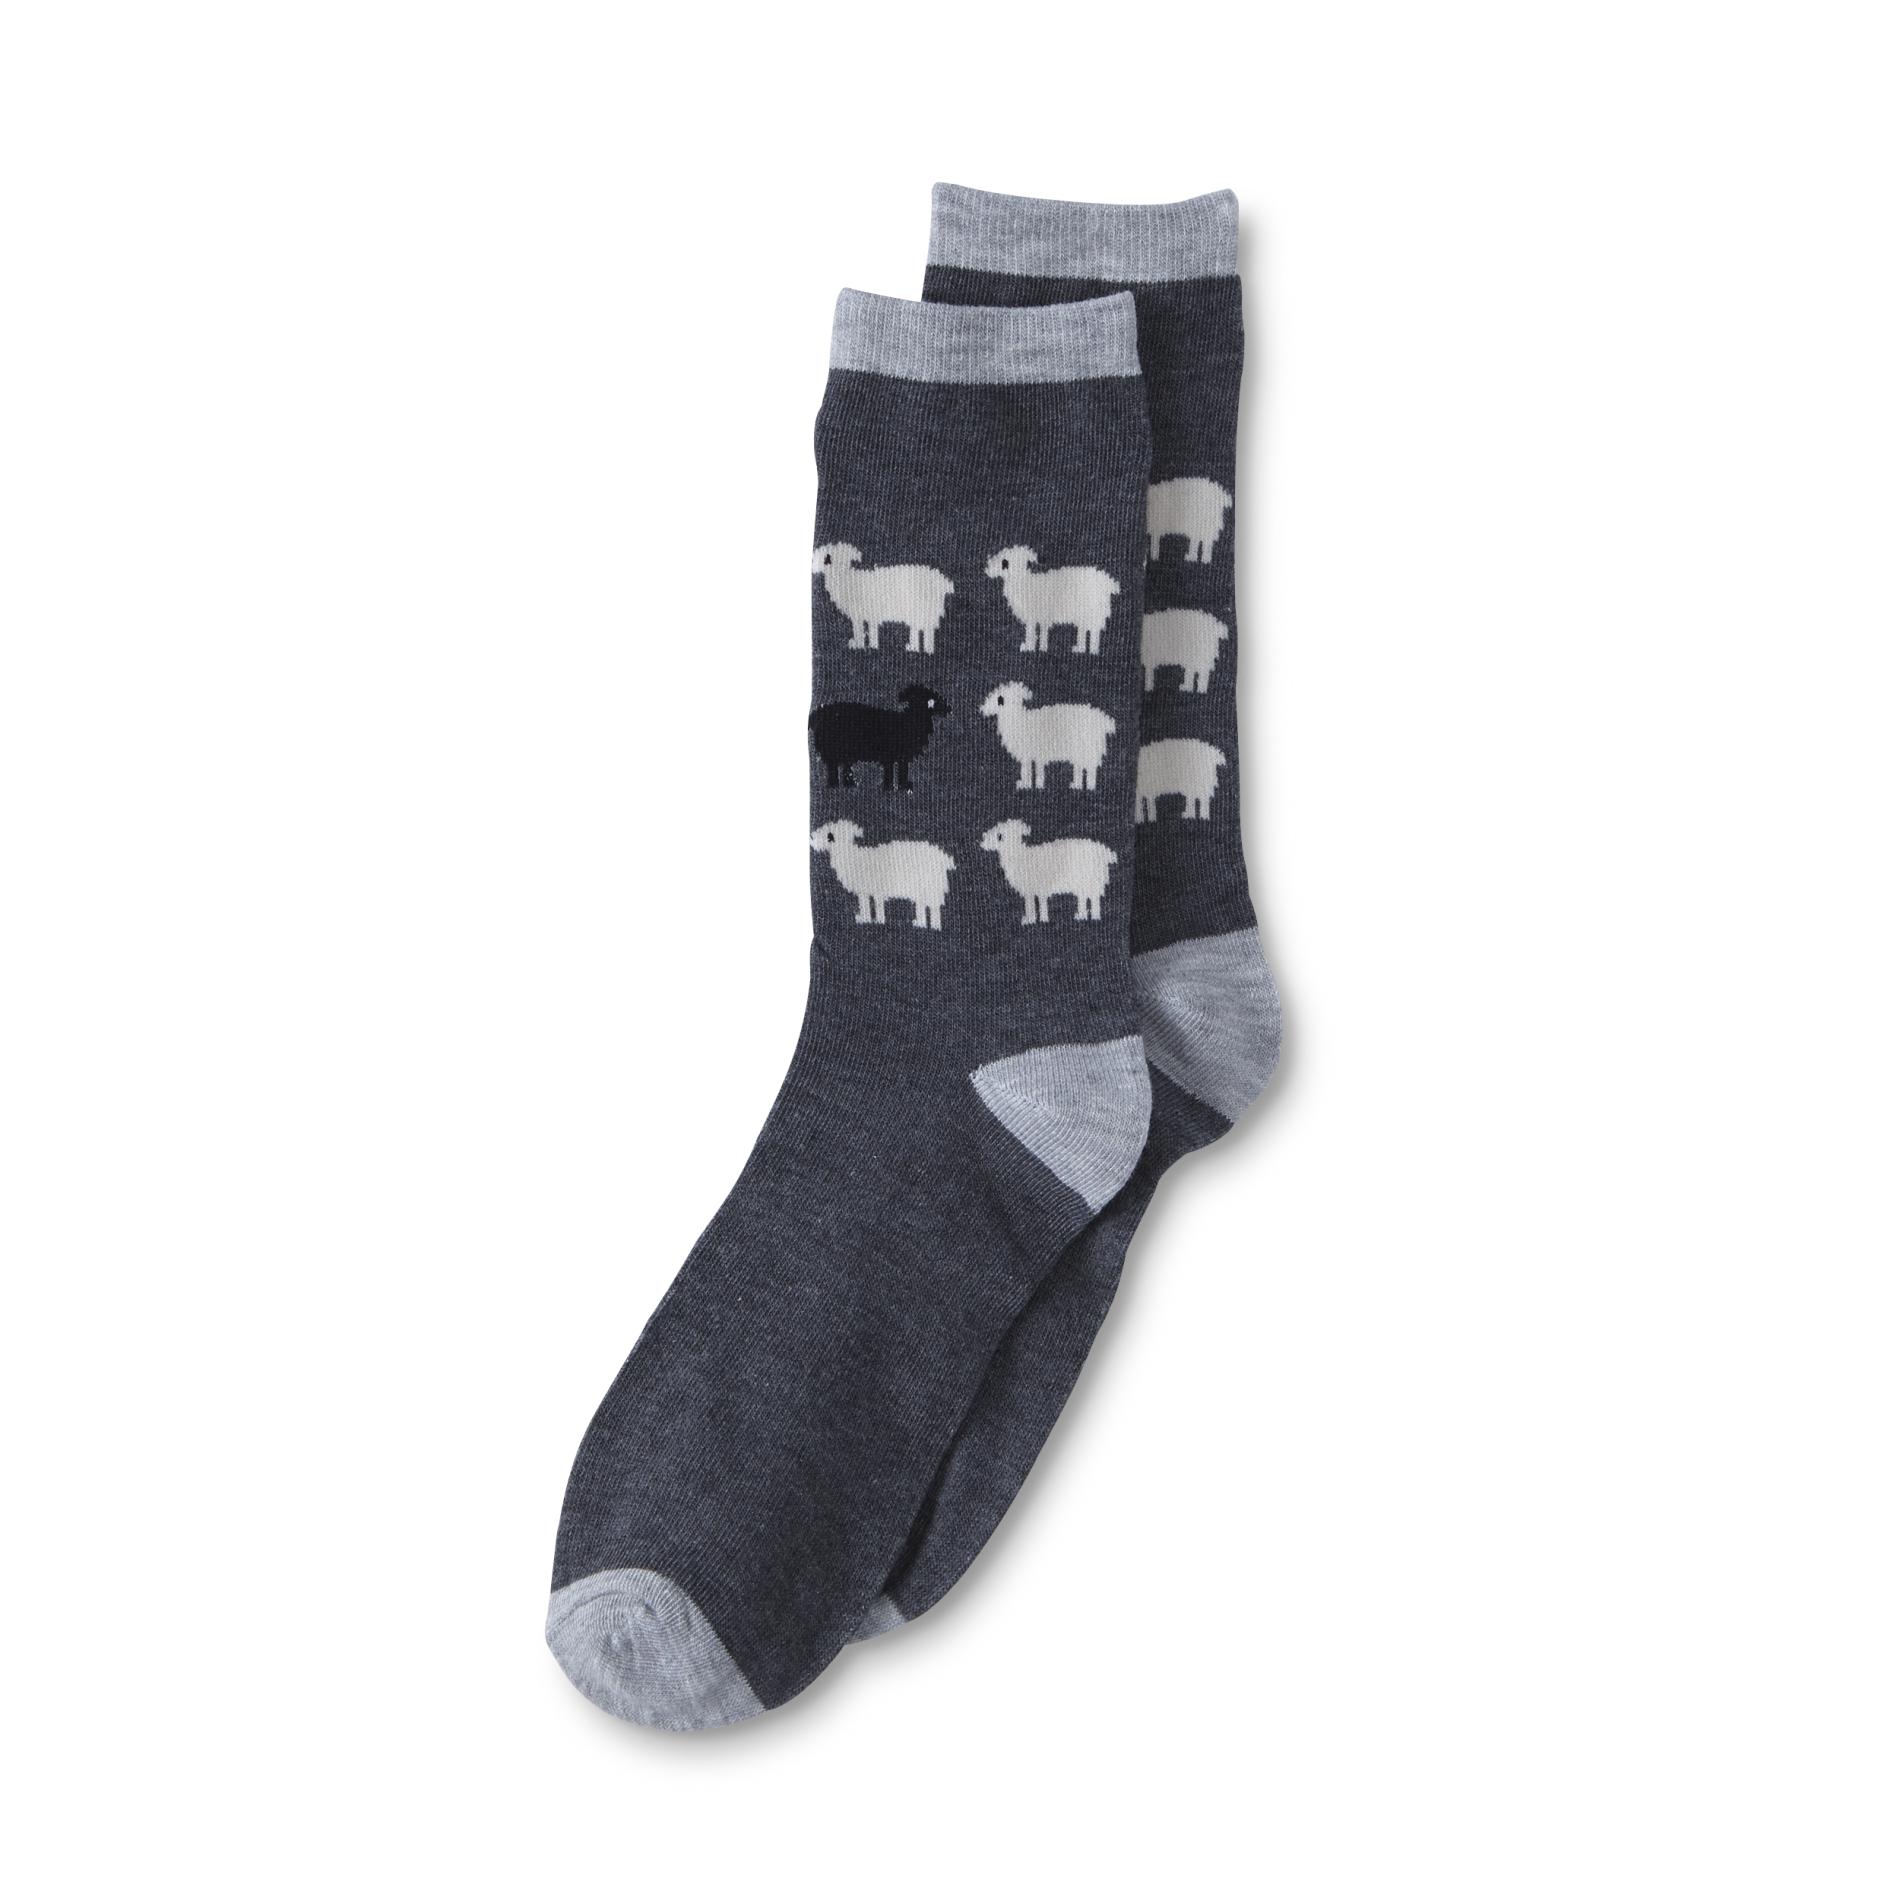 Joe Boxer Junior's Novelty Socks - Sheep